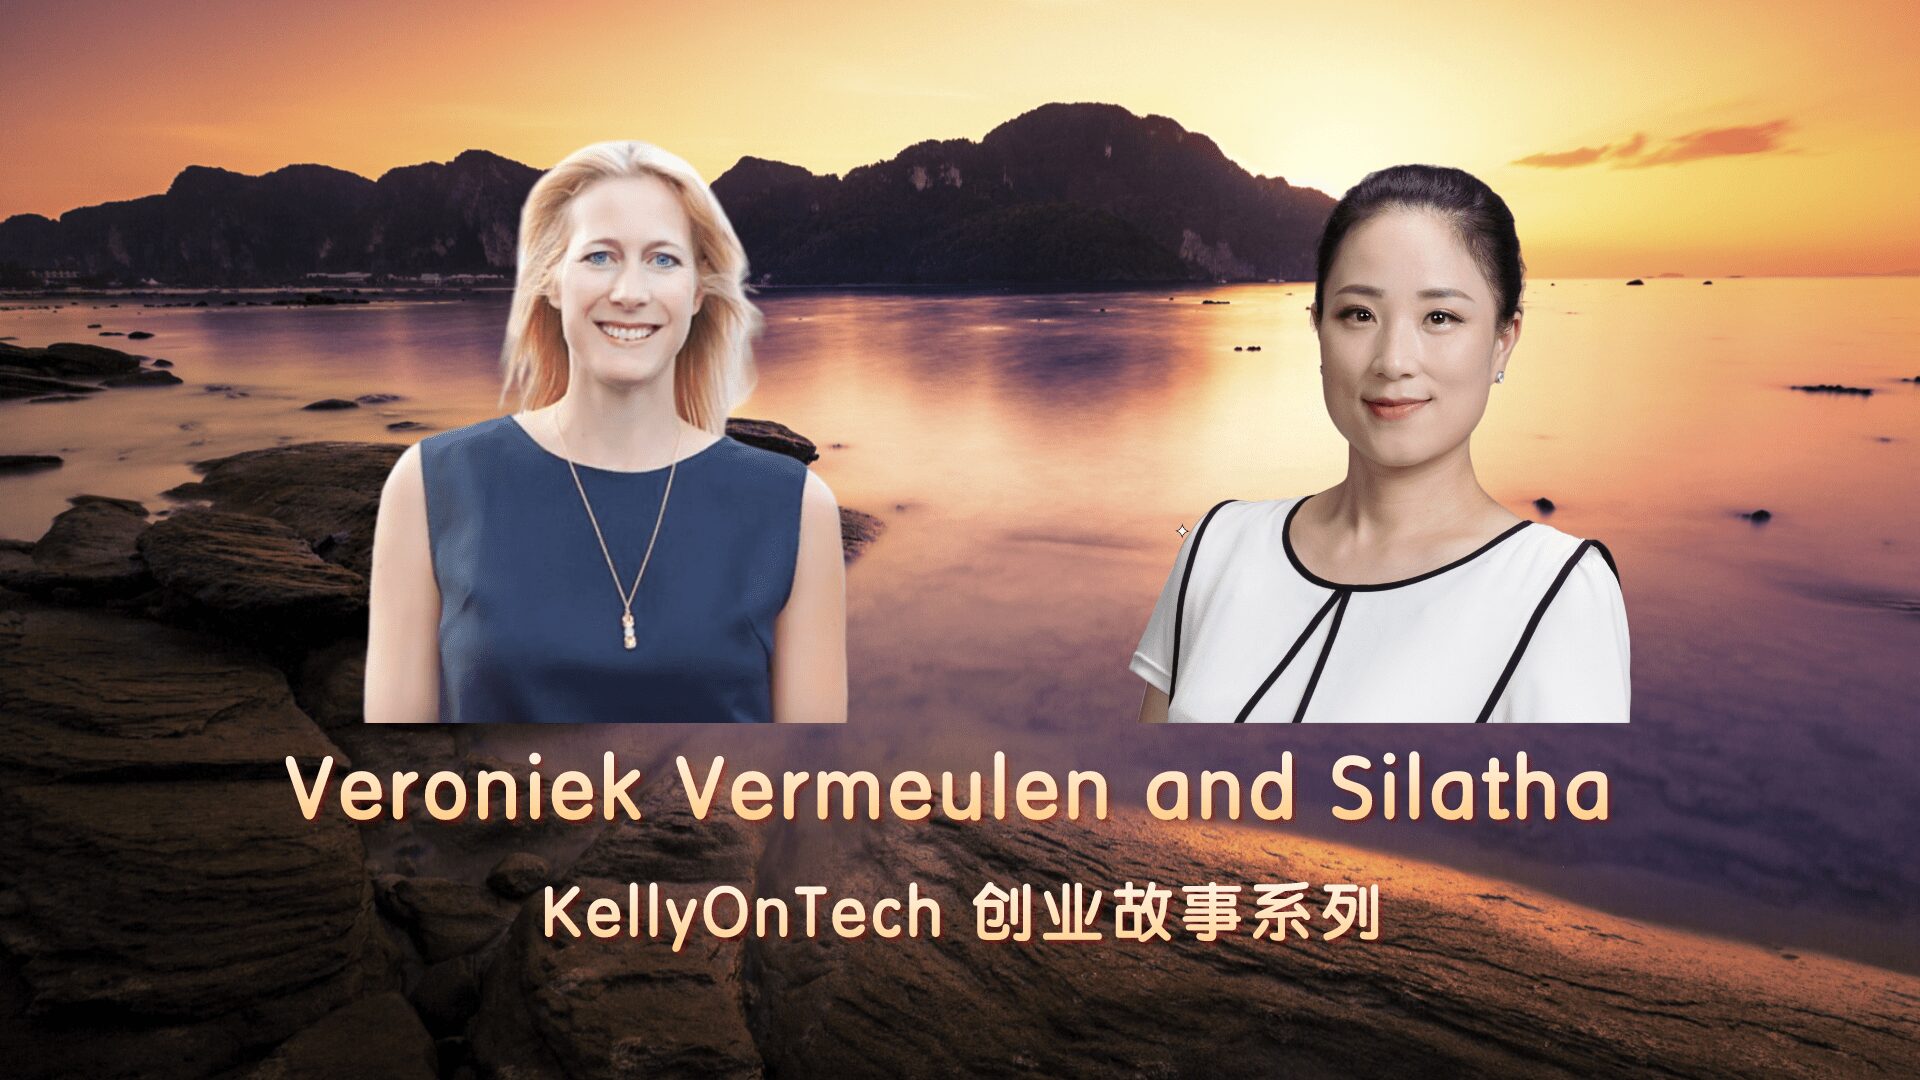 KellyOnTech Entrepreneurial Stories Veroniek Vermeulen and Silatha